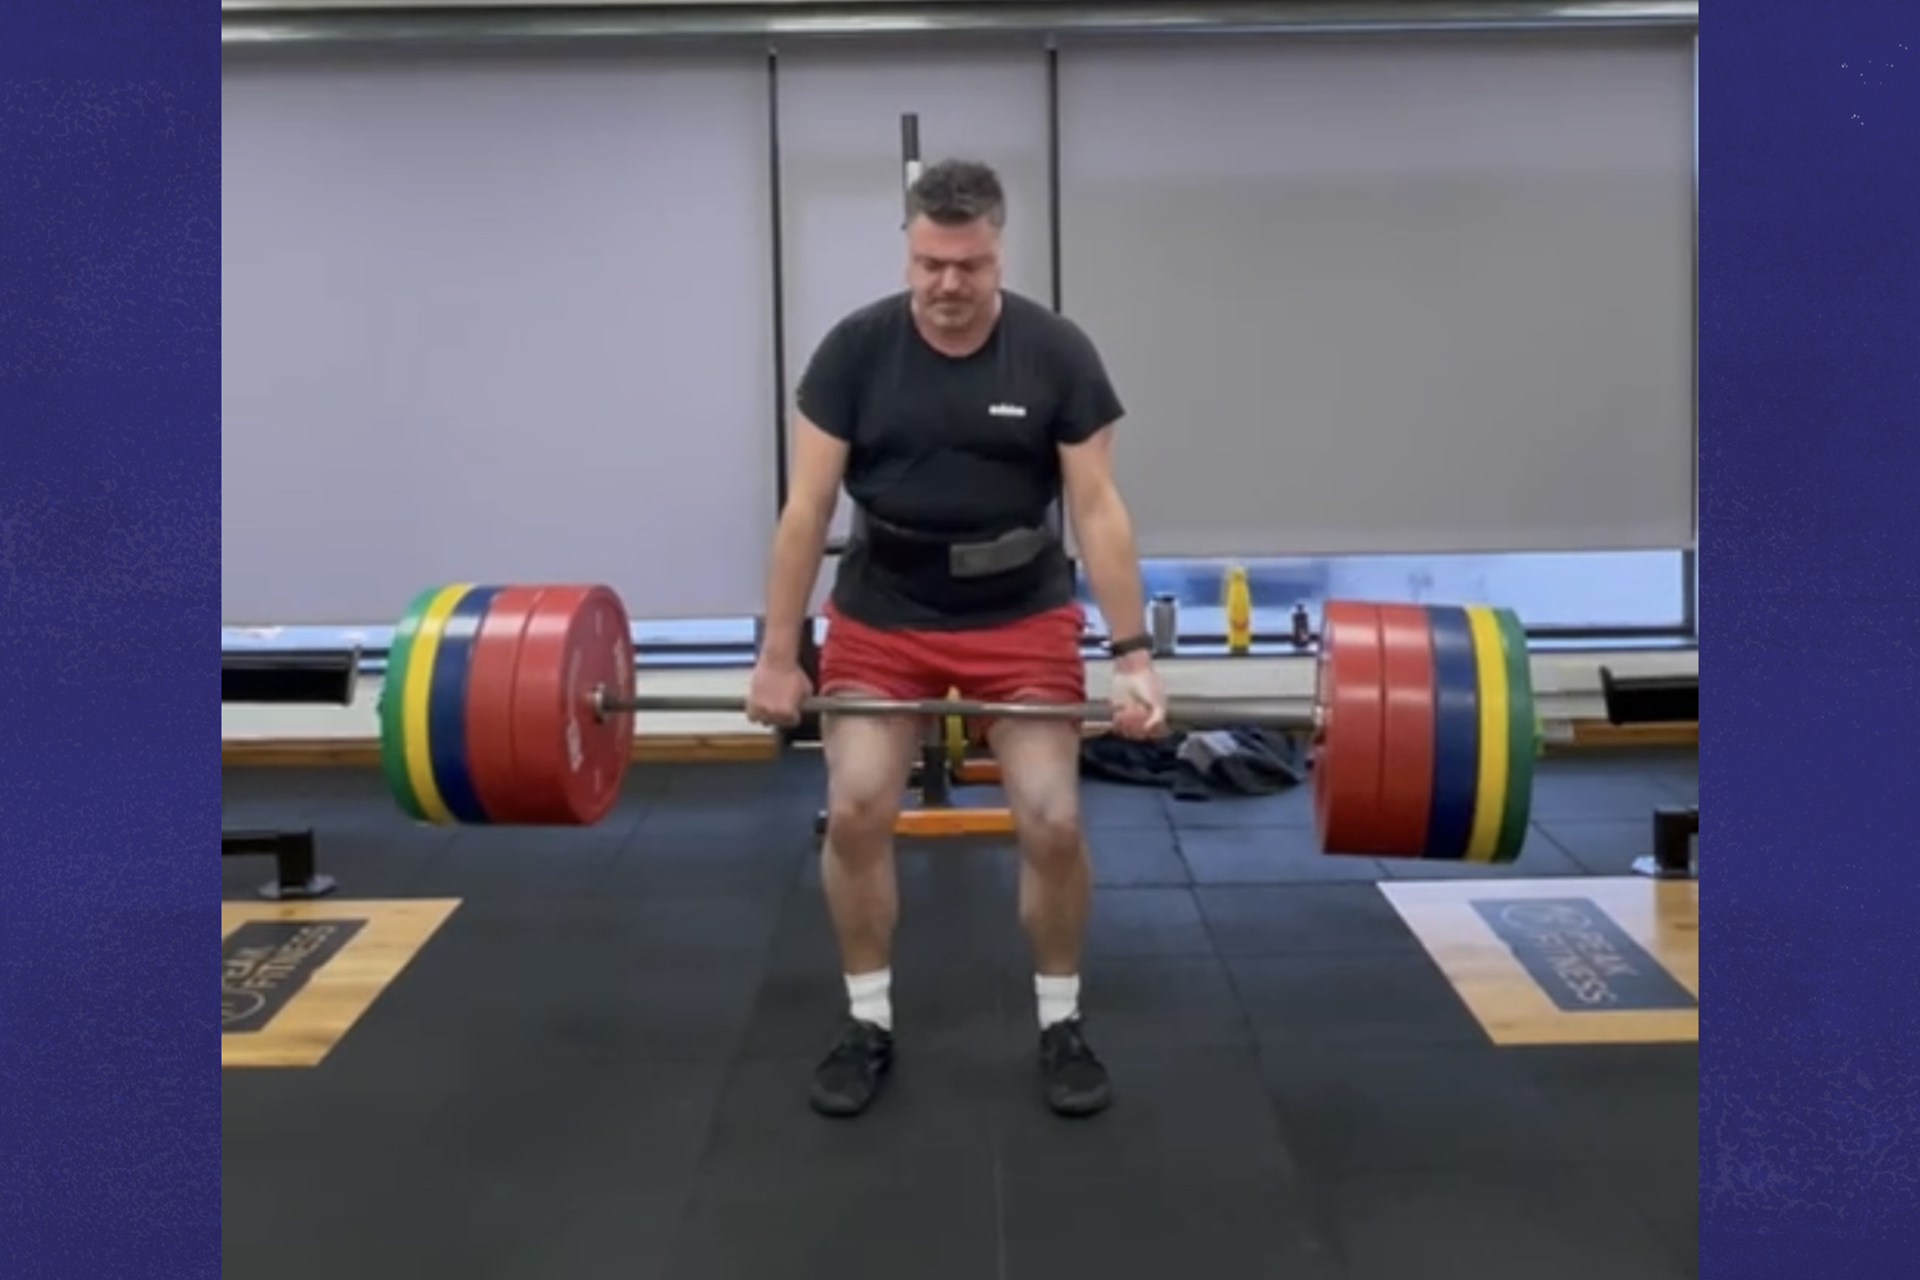 Craig lifting a heavyweight at the gym.